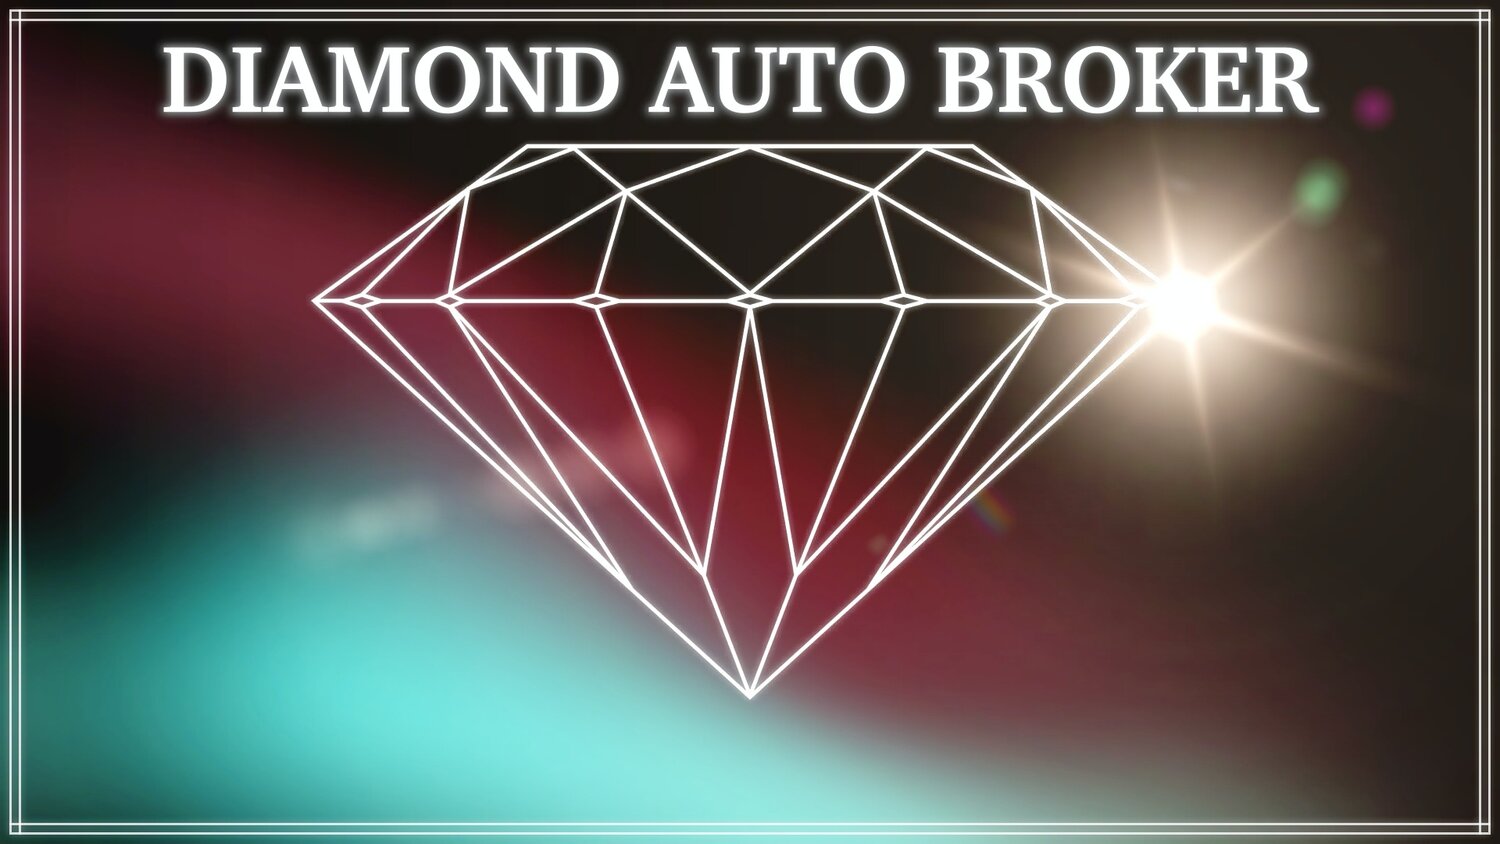 DIAMOND AUTO BROKER